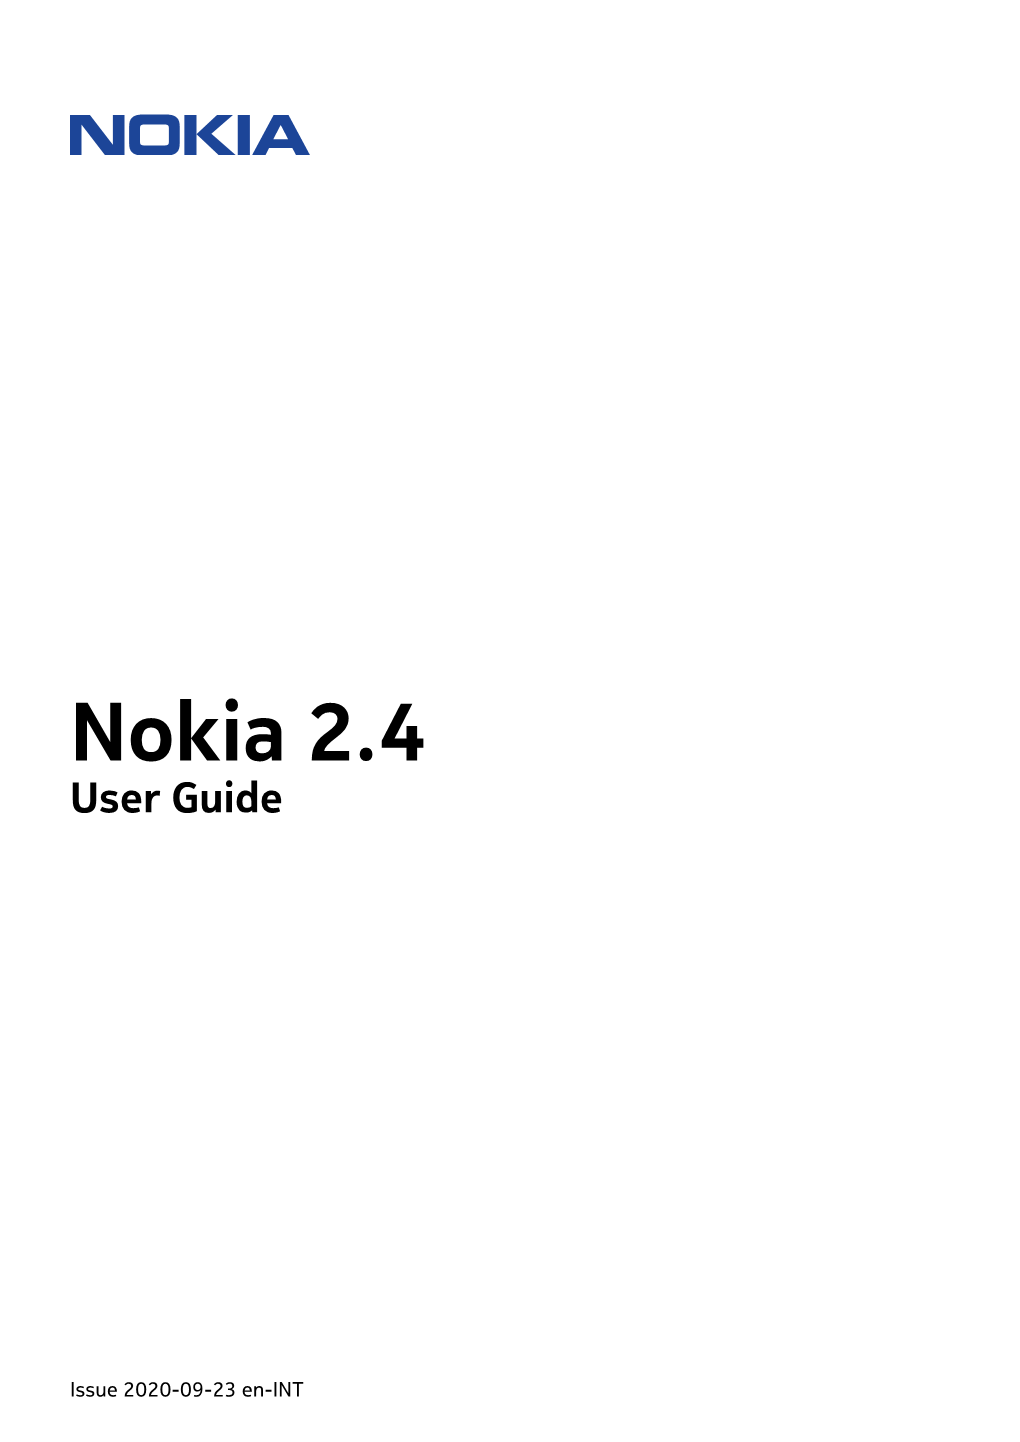 Nokia 2.4 Mobile Phone User Manual